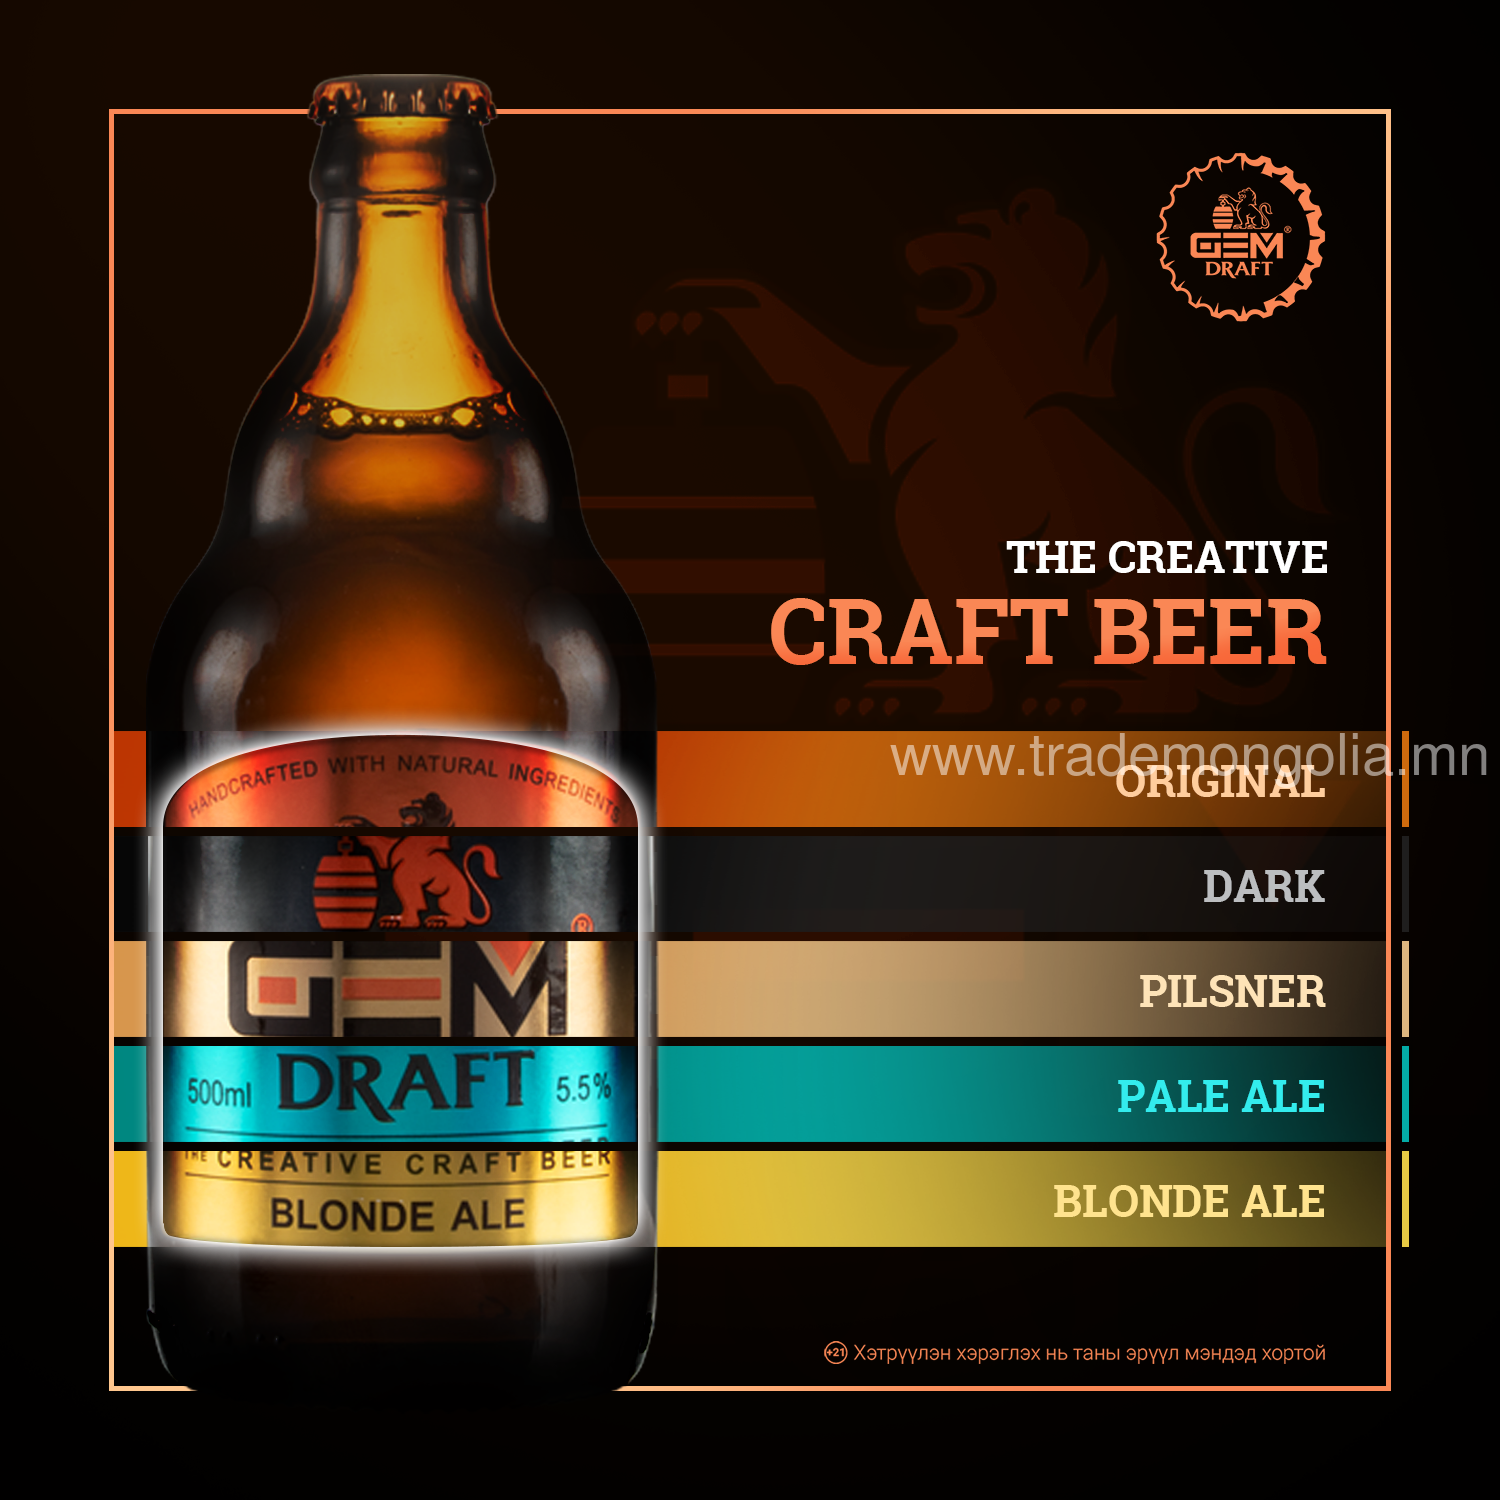 Gem Draft Creative craft beer